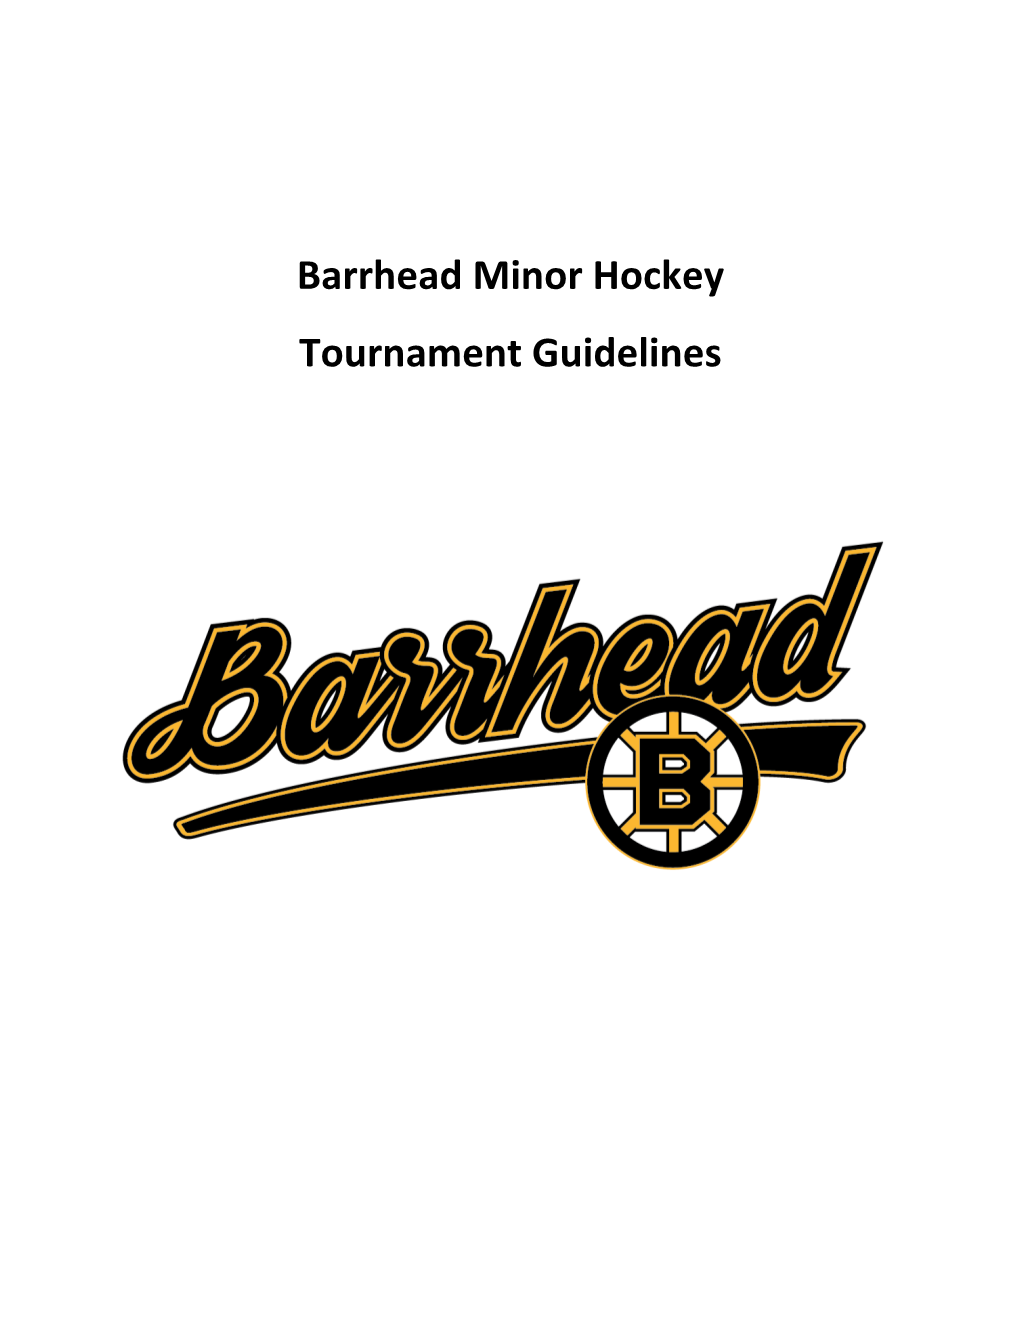 Barrhead Minor Hockey